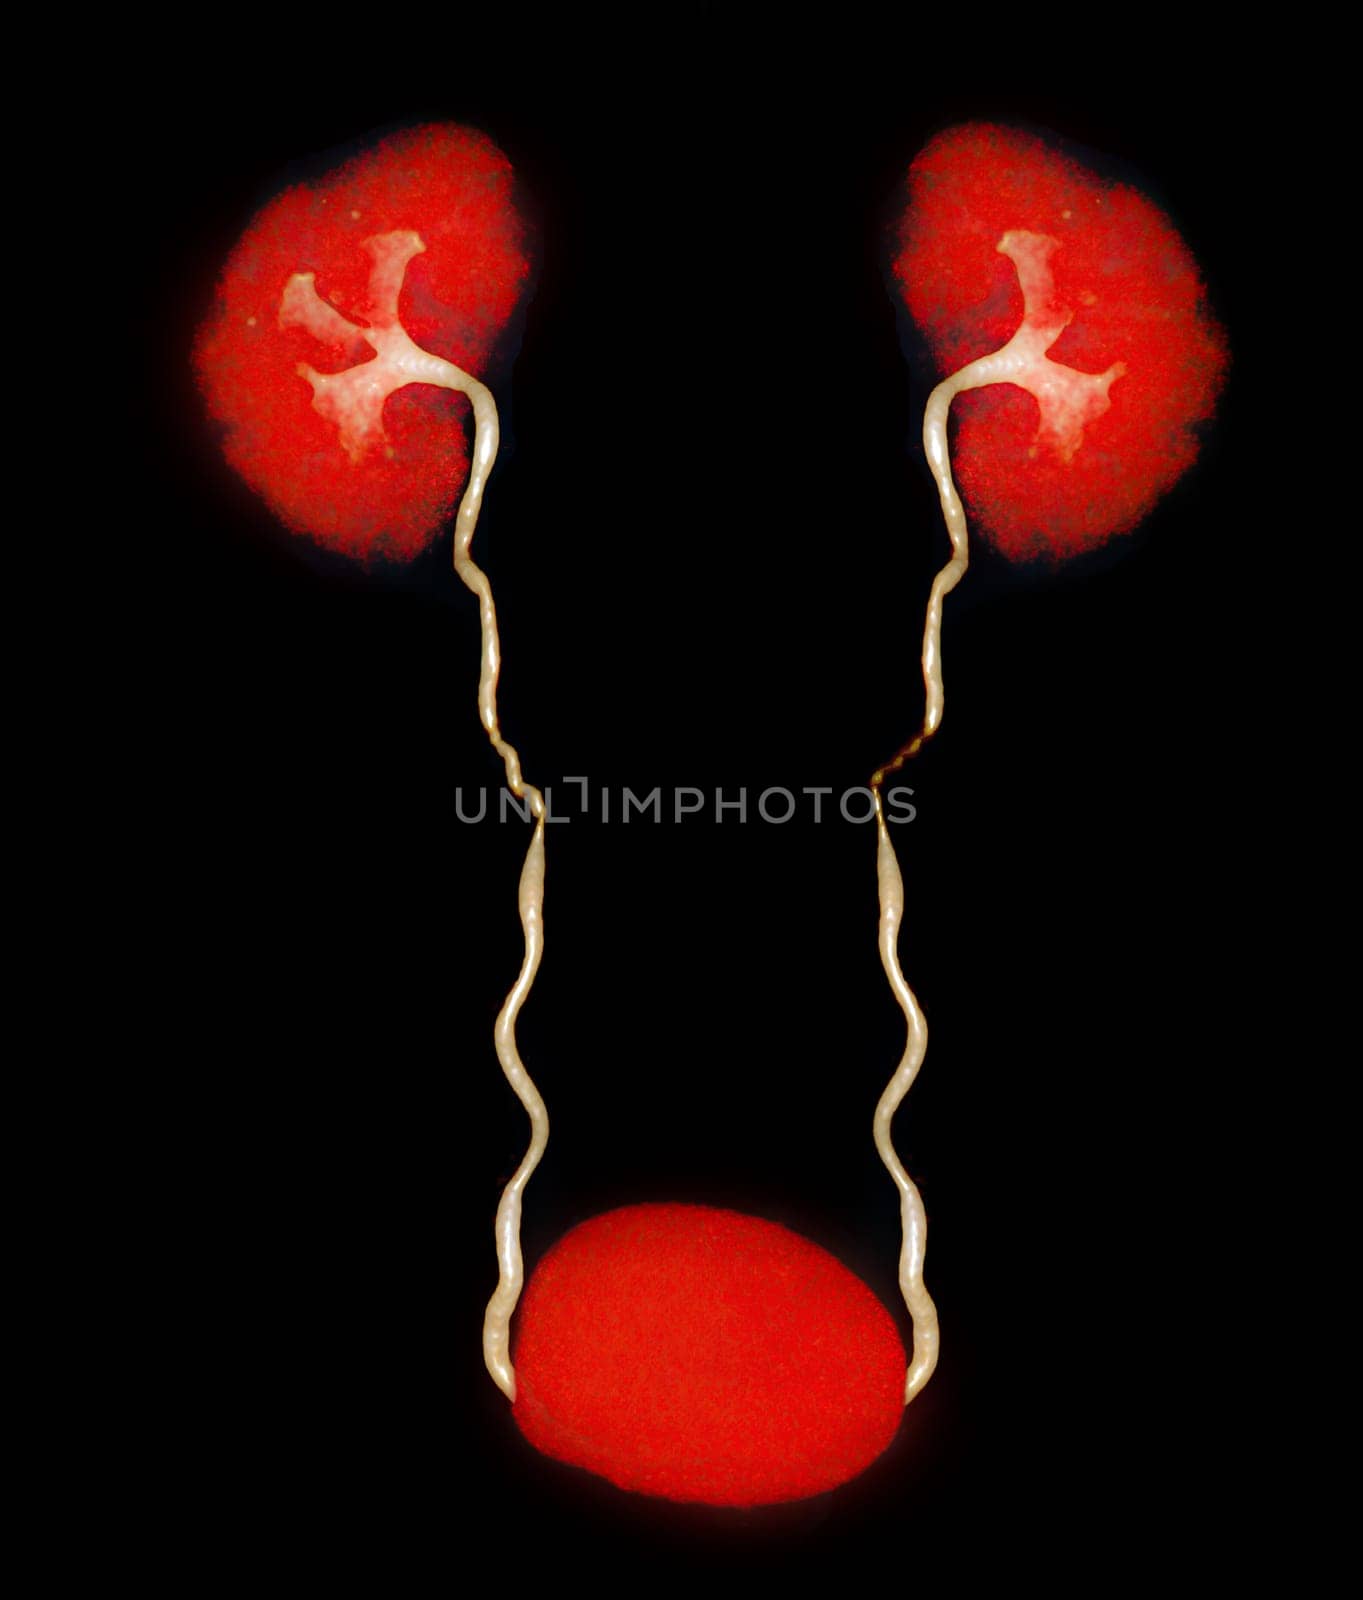 CTA Renal artery  3D rendering image  showing both kidney, Ureter and bladder .